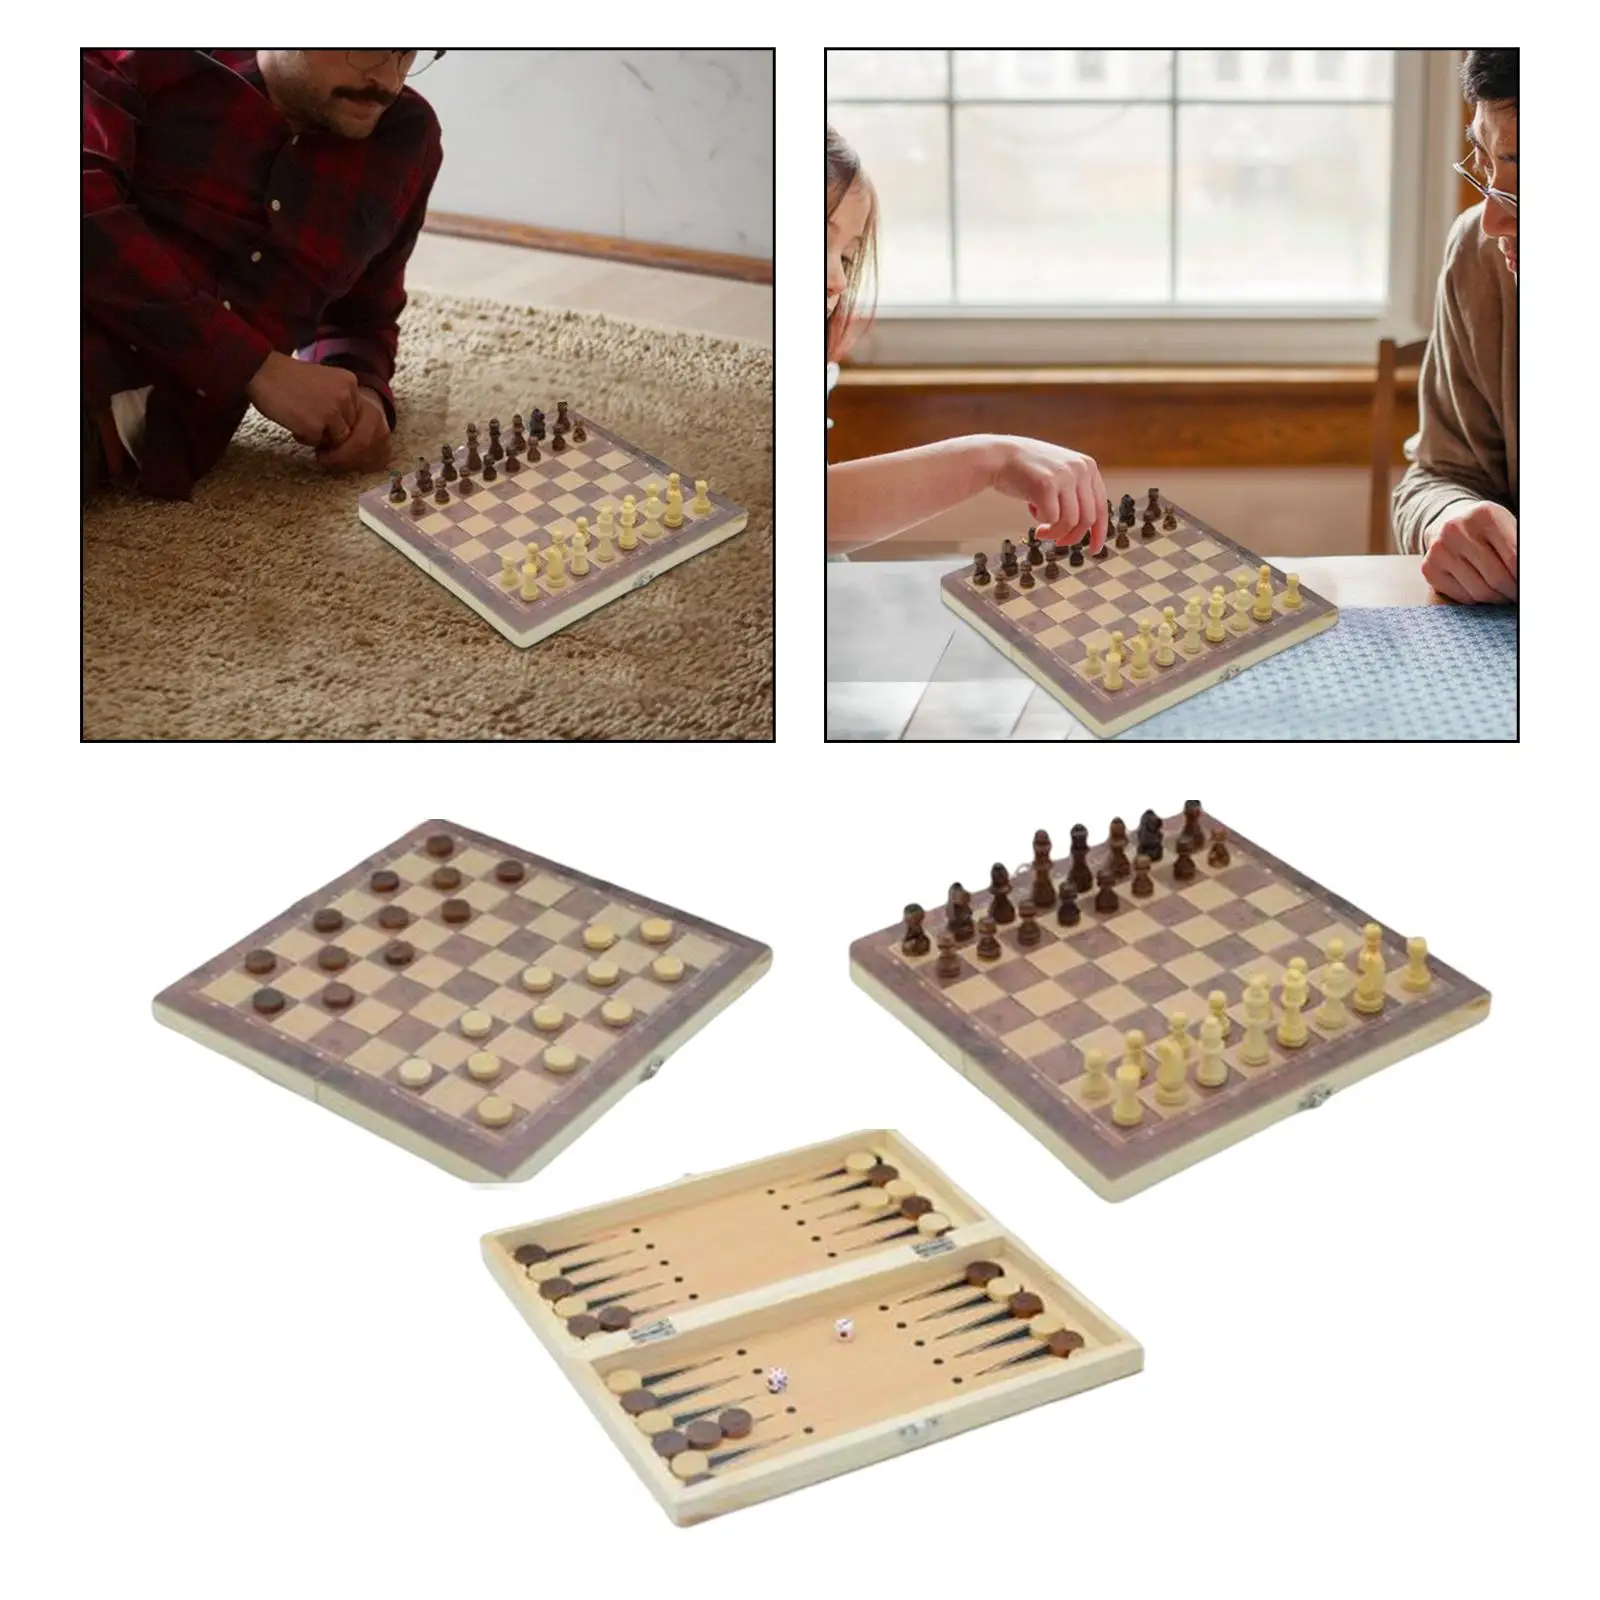 Chess Set Folding Chess Game Travel Case Lightweight Chess Checkers Backgammon